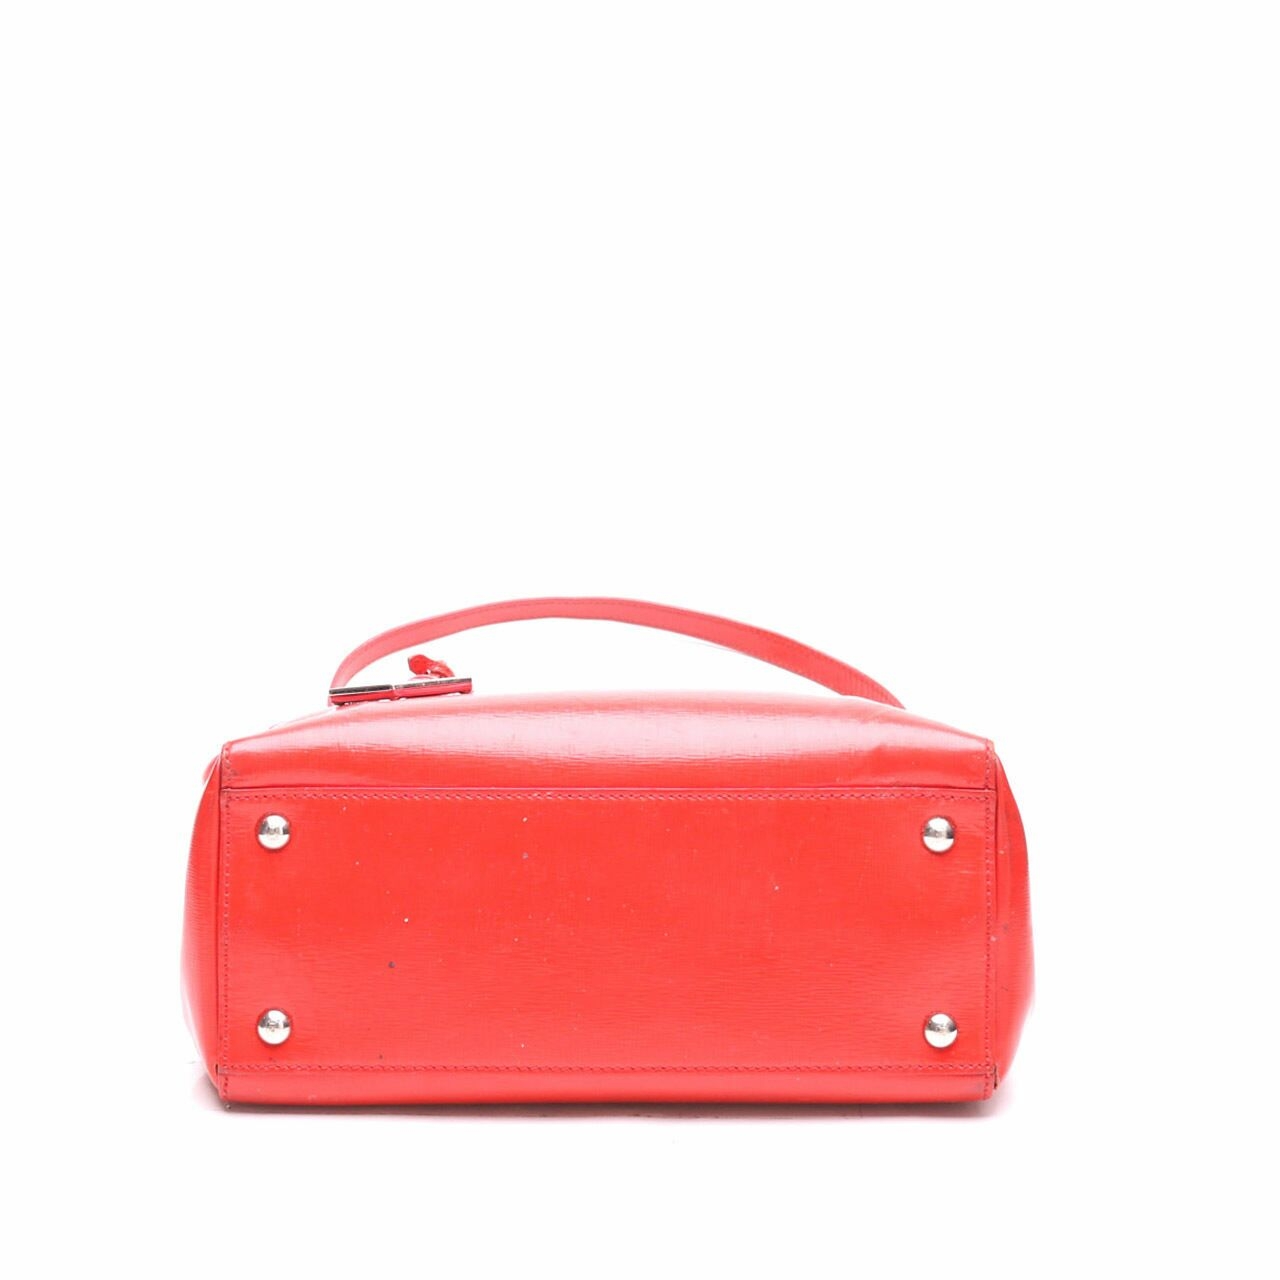 Fendi Red Patent Leather Petite Sac 2jours Elite Satchel Bag